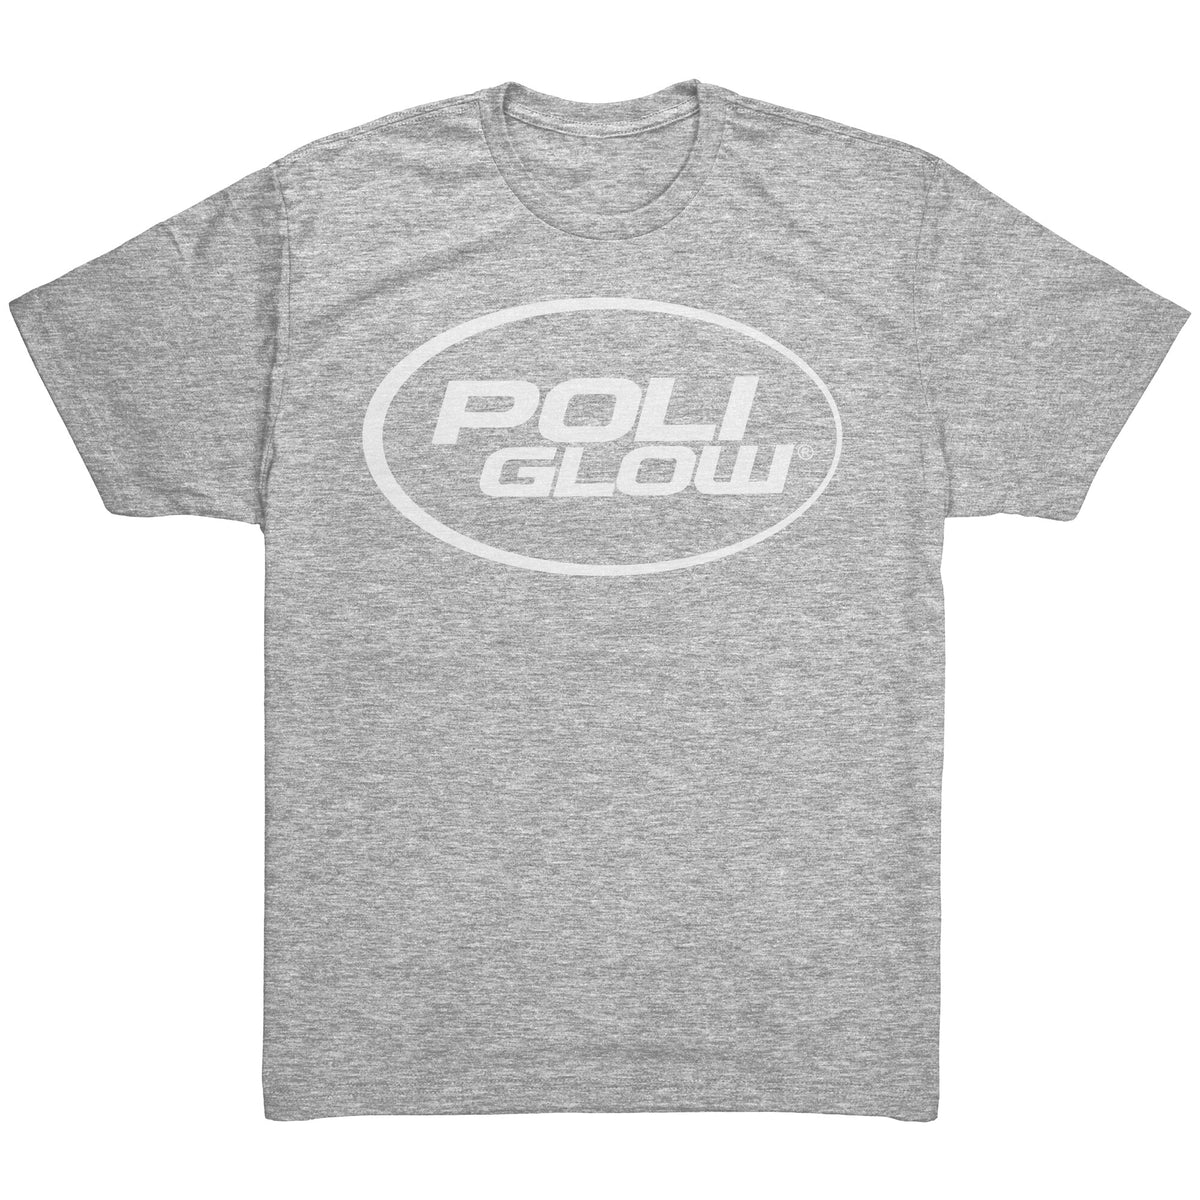 Poli Glow - Mens Triblend Shirt